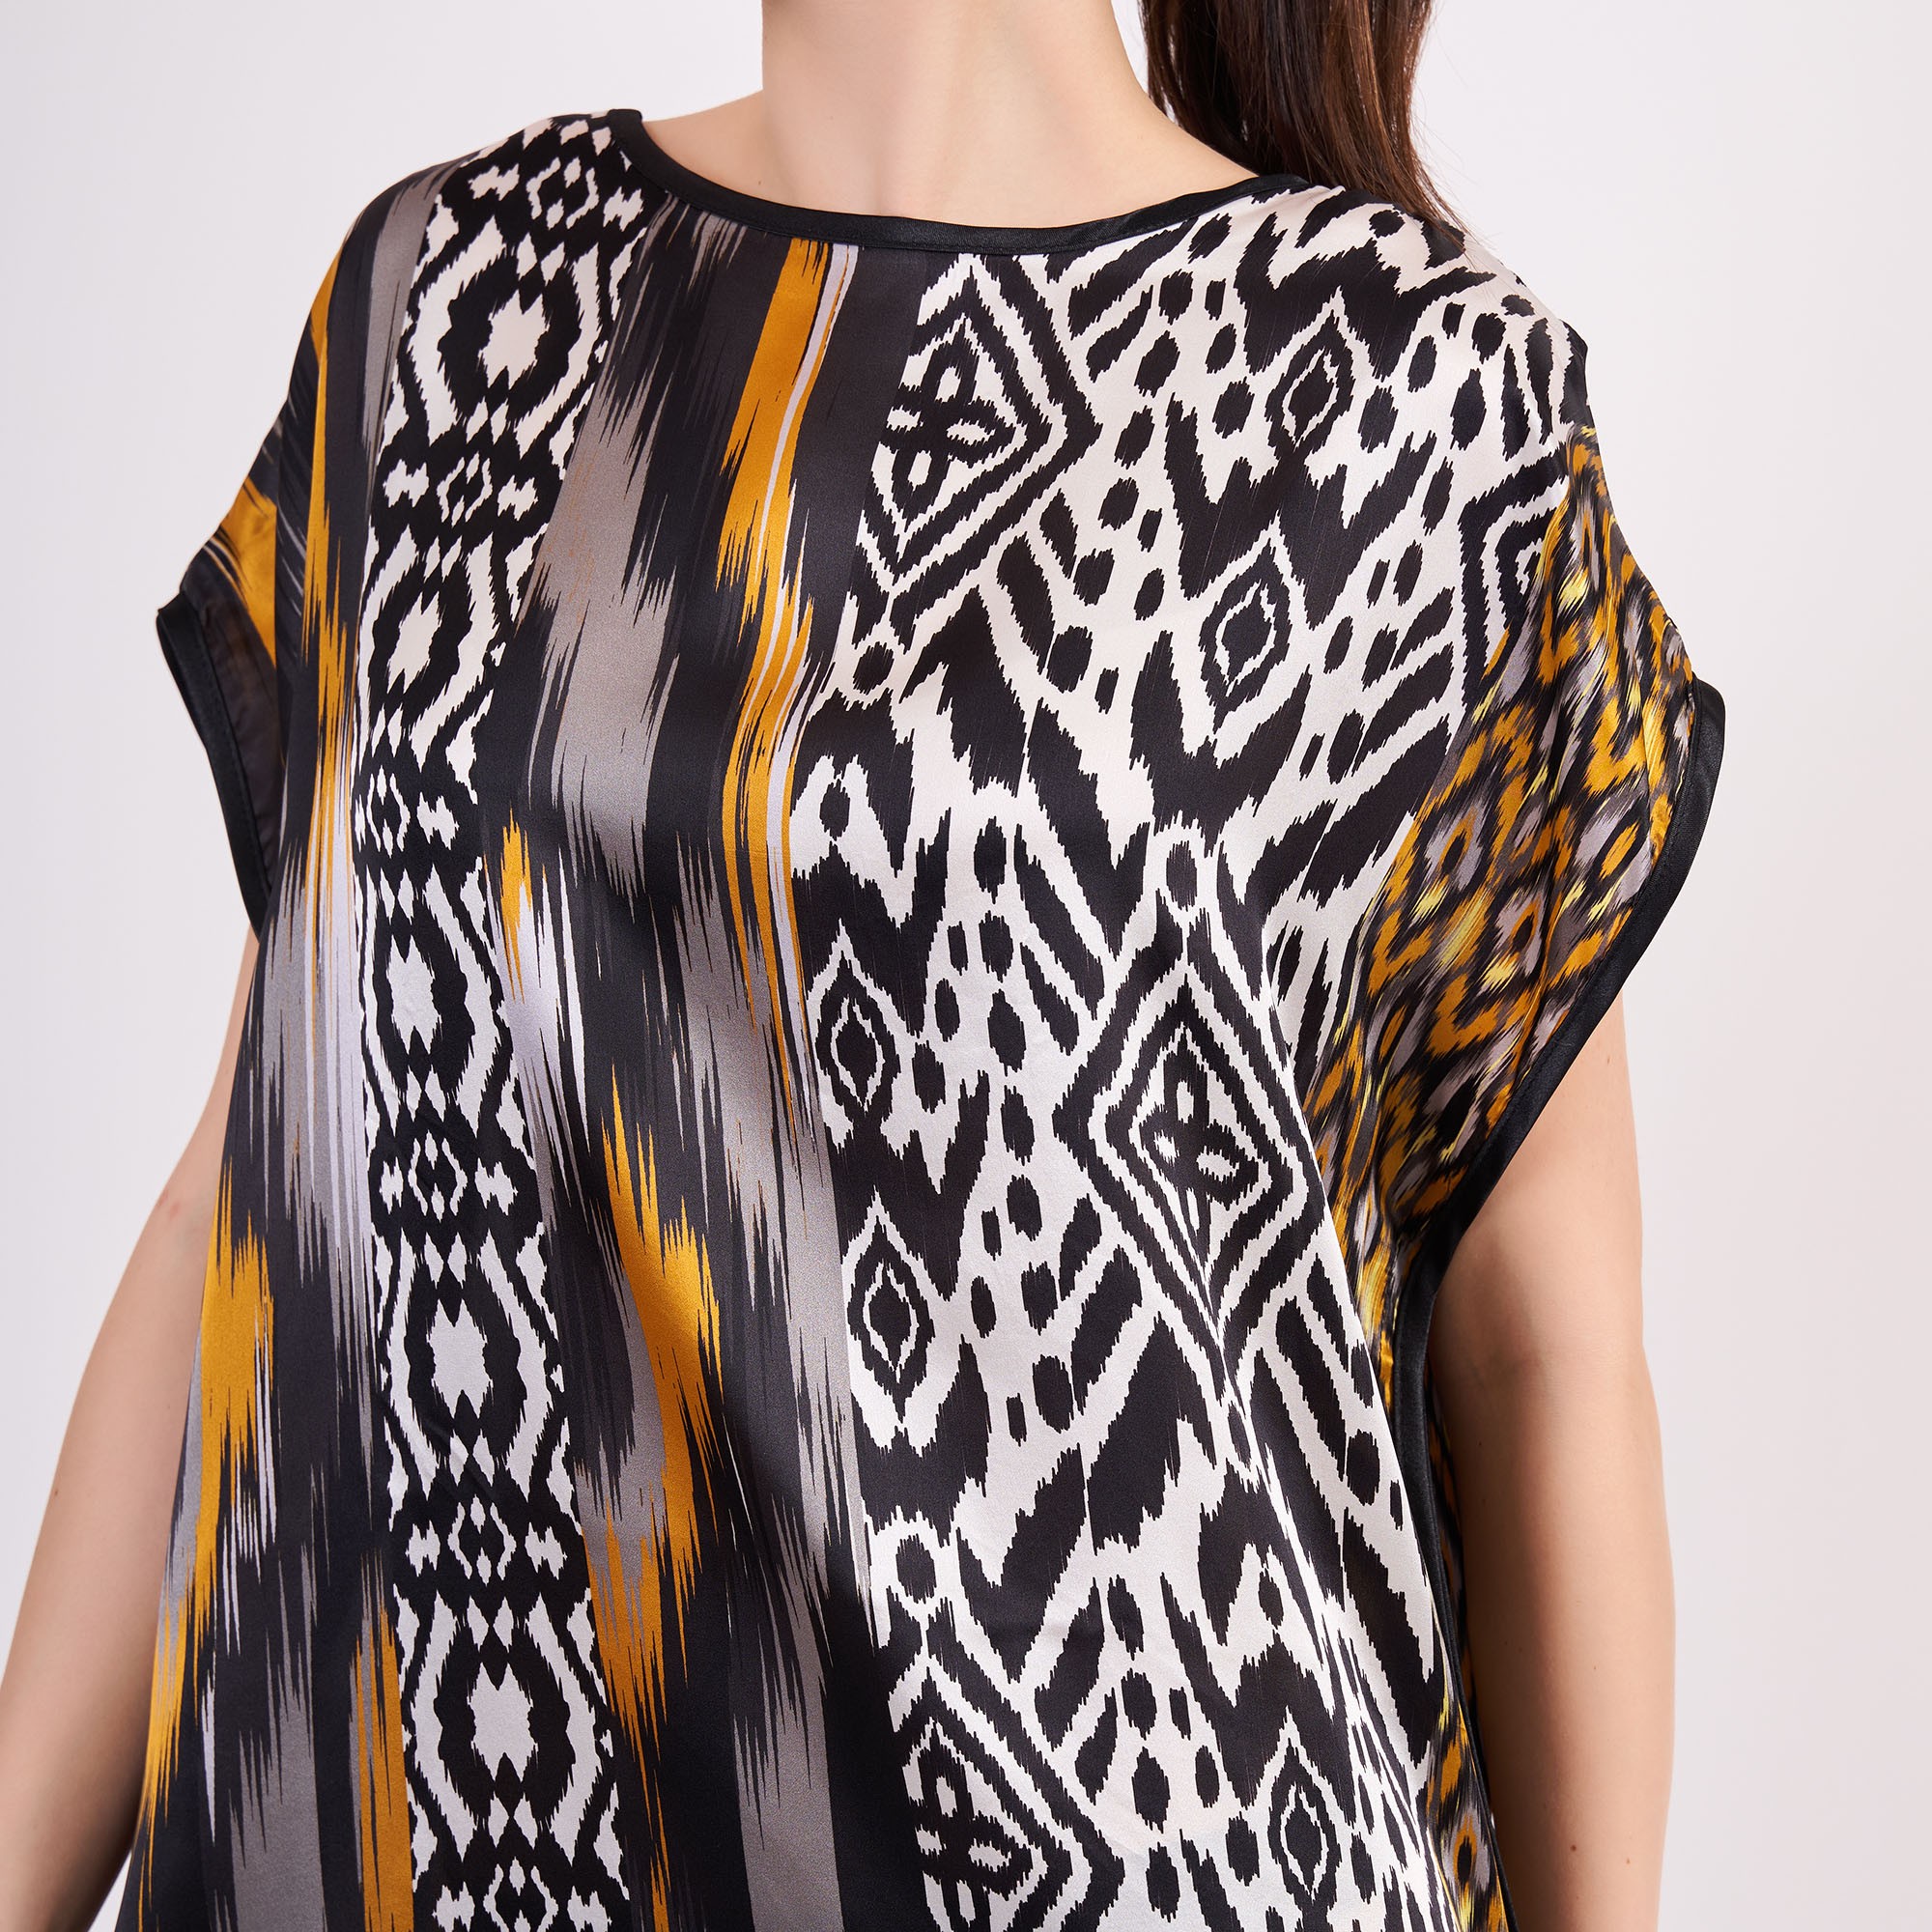 Silk Plus Size Short Dress For Women | Oversized Short Kaftan Ikat Pattern 2 | Loose Fitting Dress